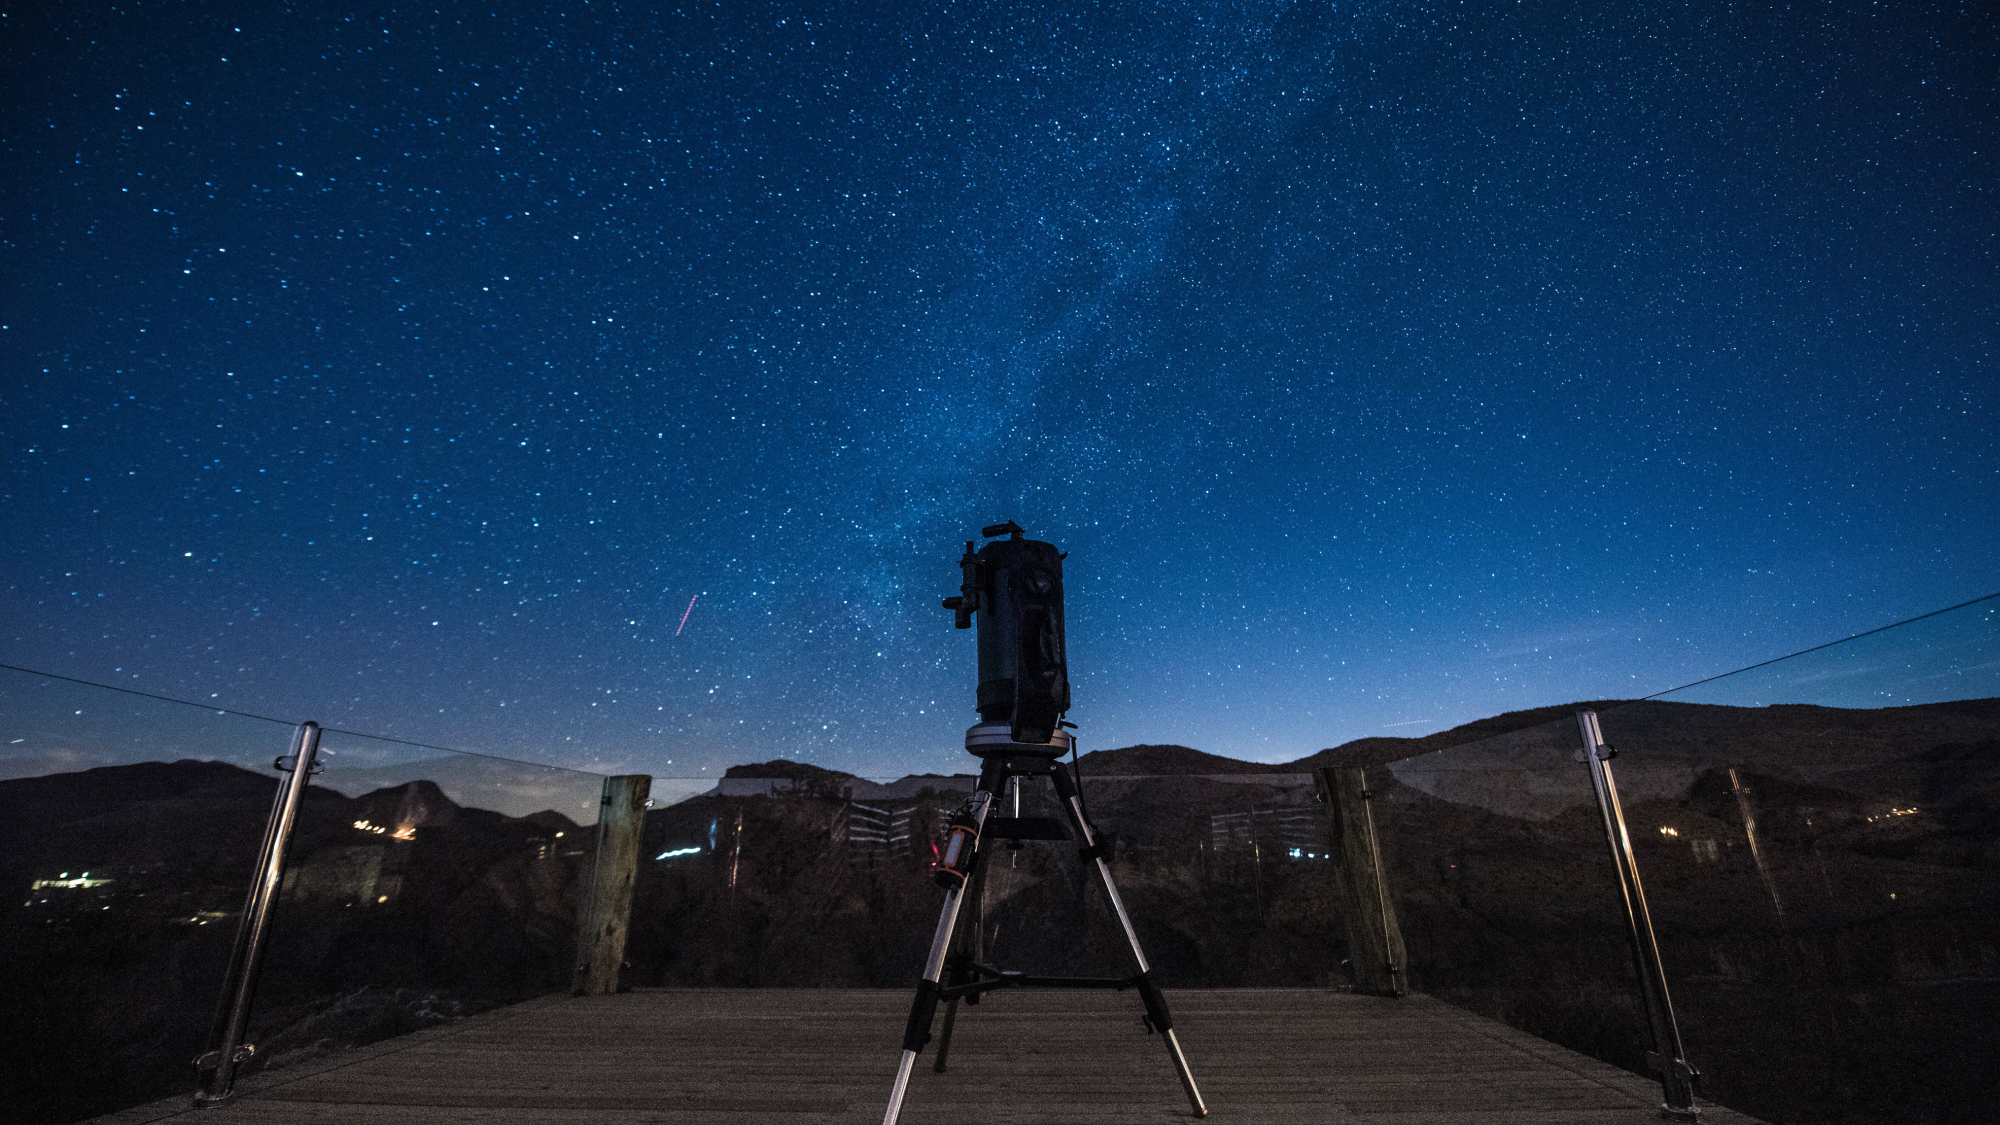 telescope under the stars at night